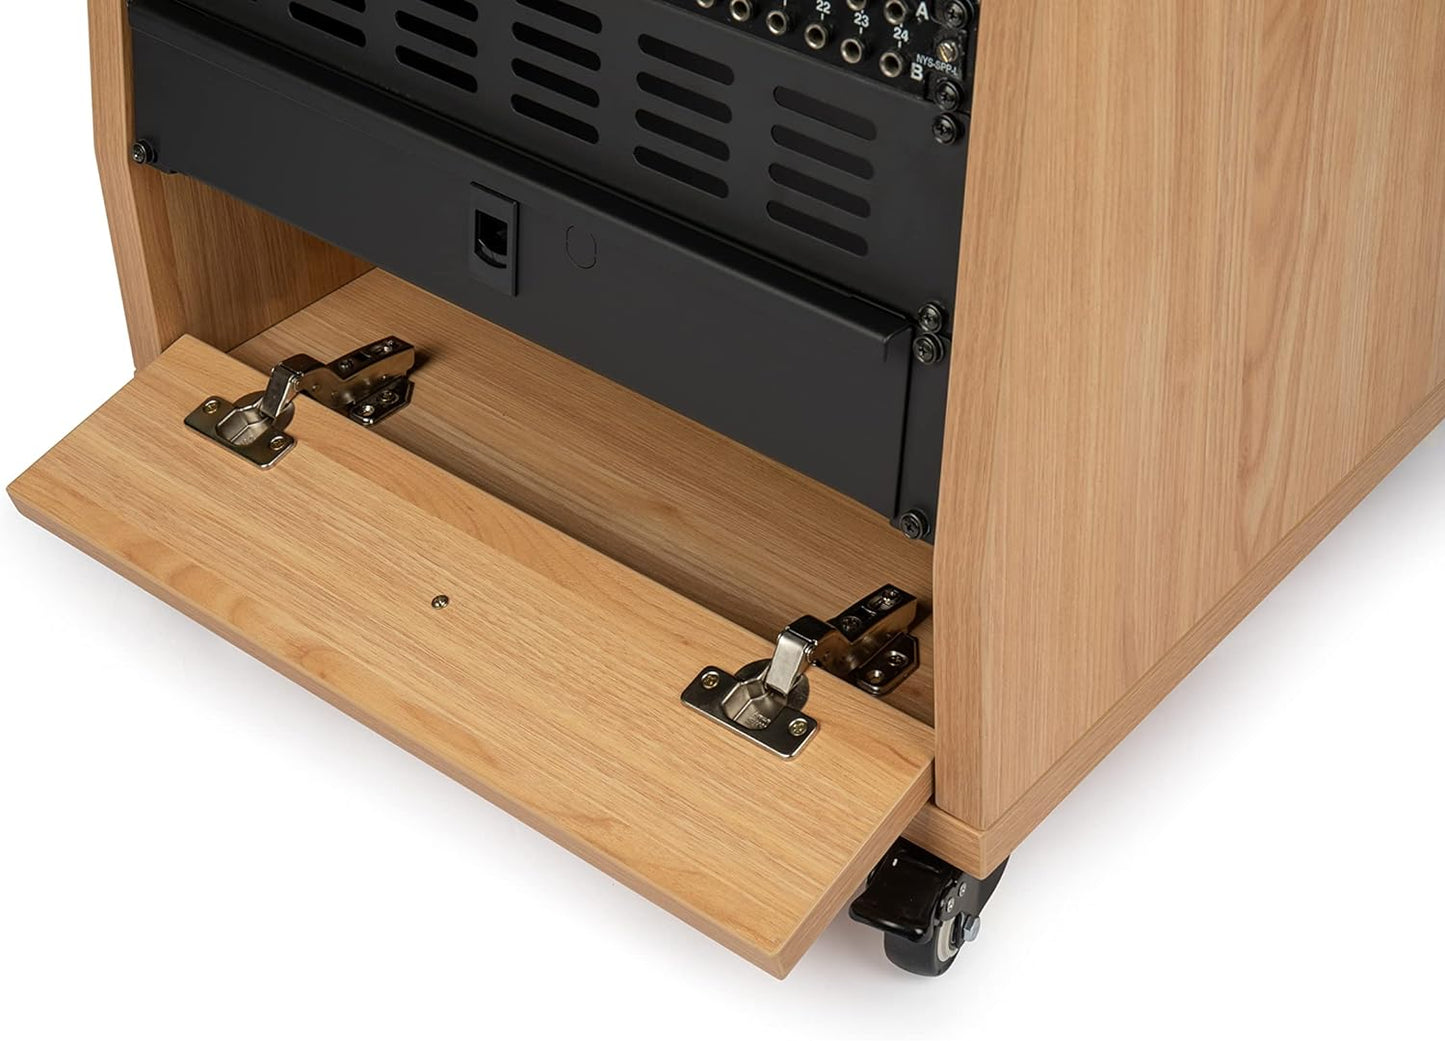 Gator Elite Furniture Series 12U Angled Studio Rack with Locking Casters – Natural Maple Matte